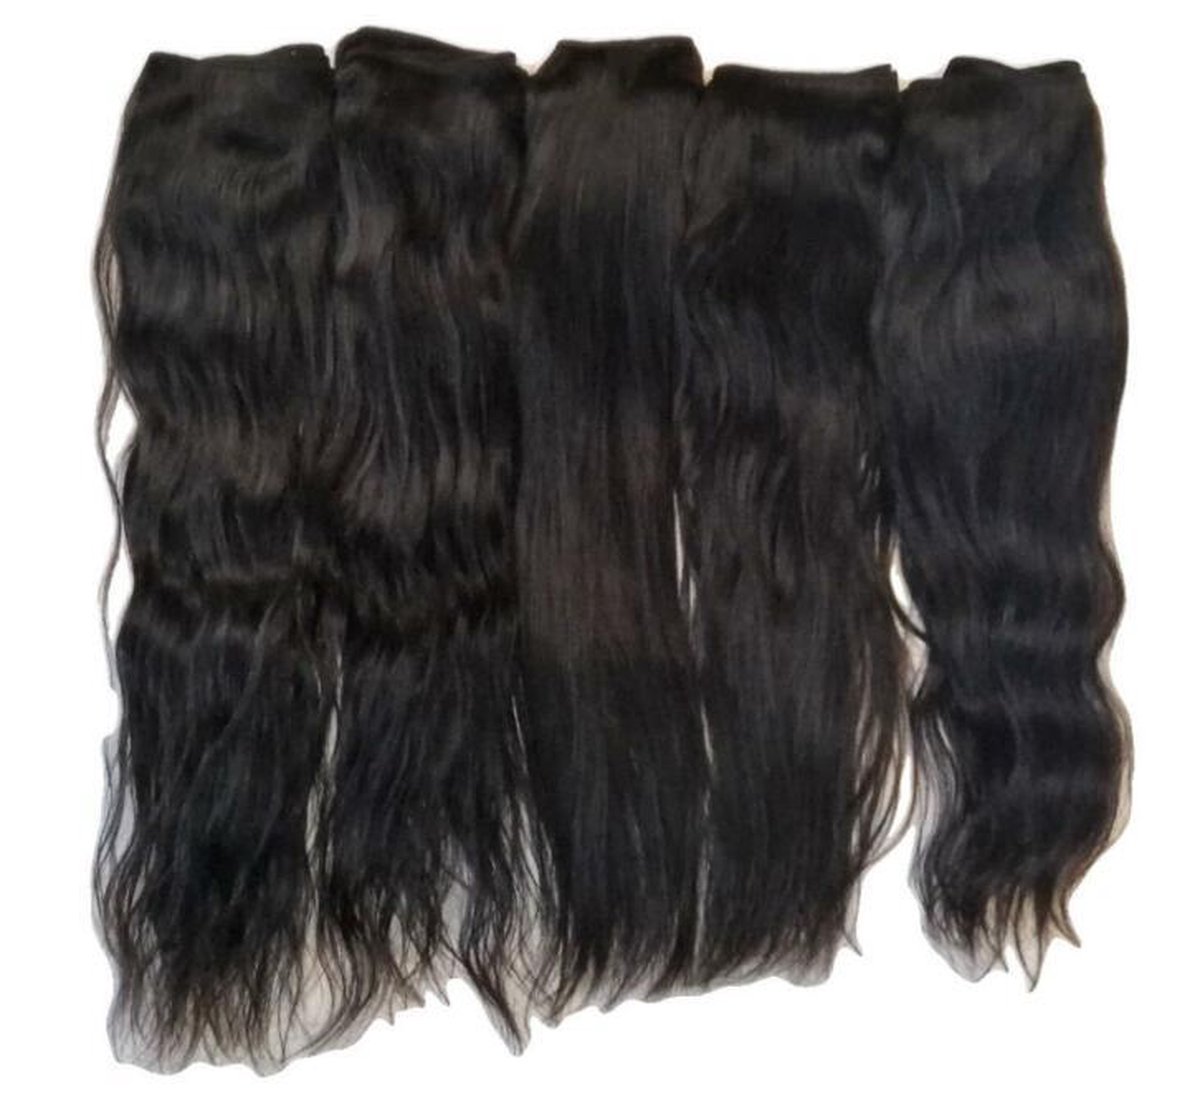 Brazilian human hair ECHT HAAR weave bundel 100gram |